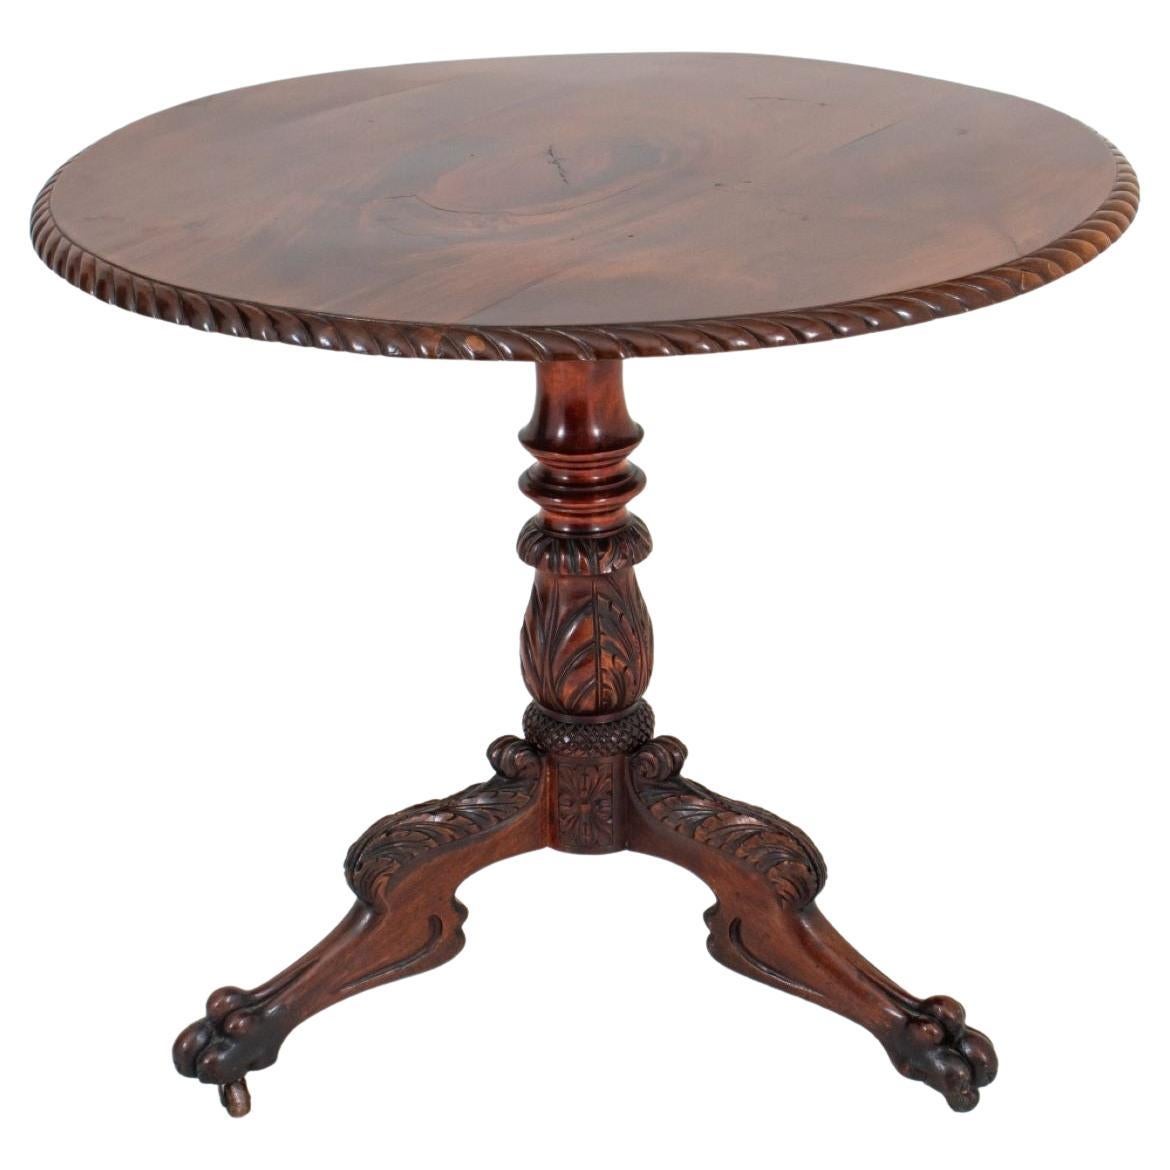 Late Regency Mahogany Circular Tilt-Top Table